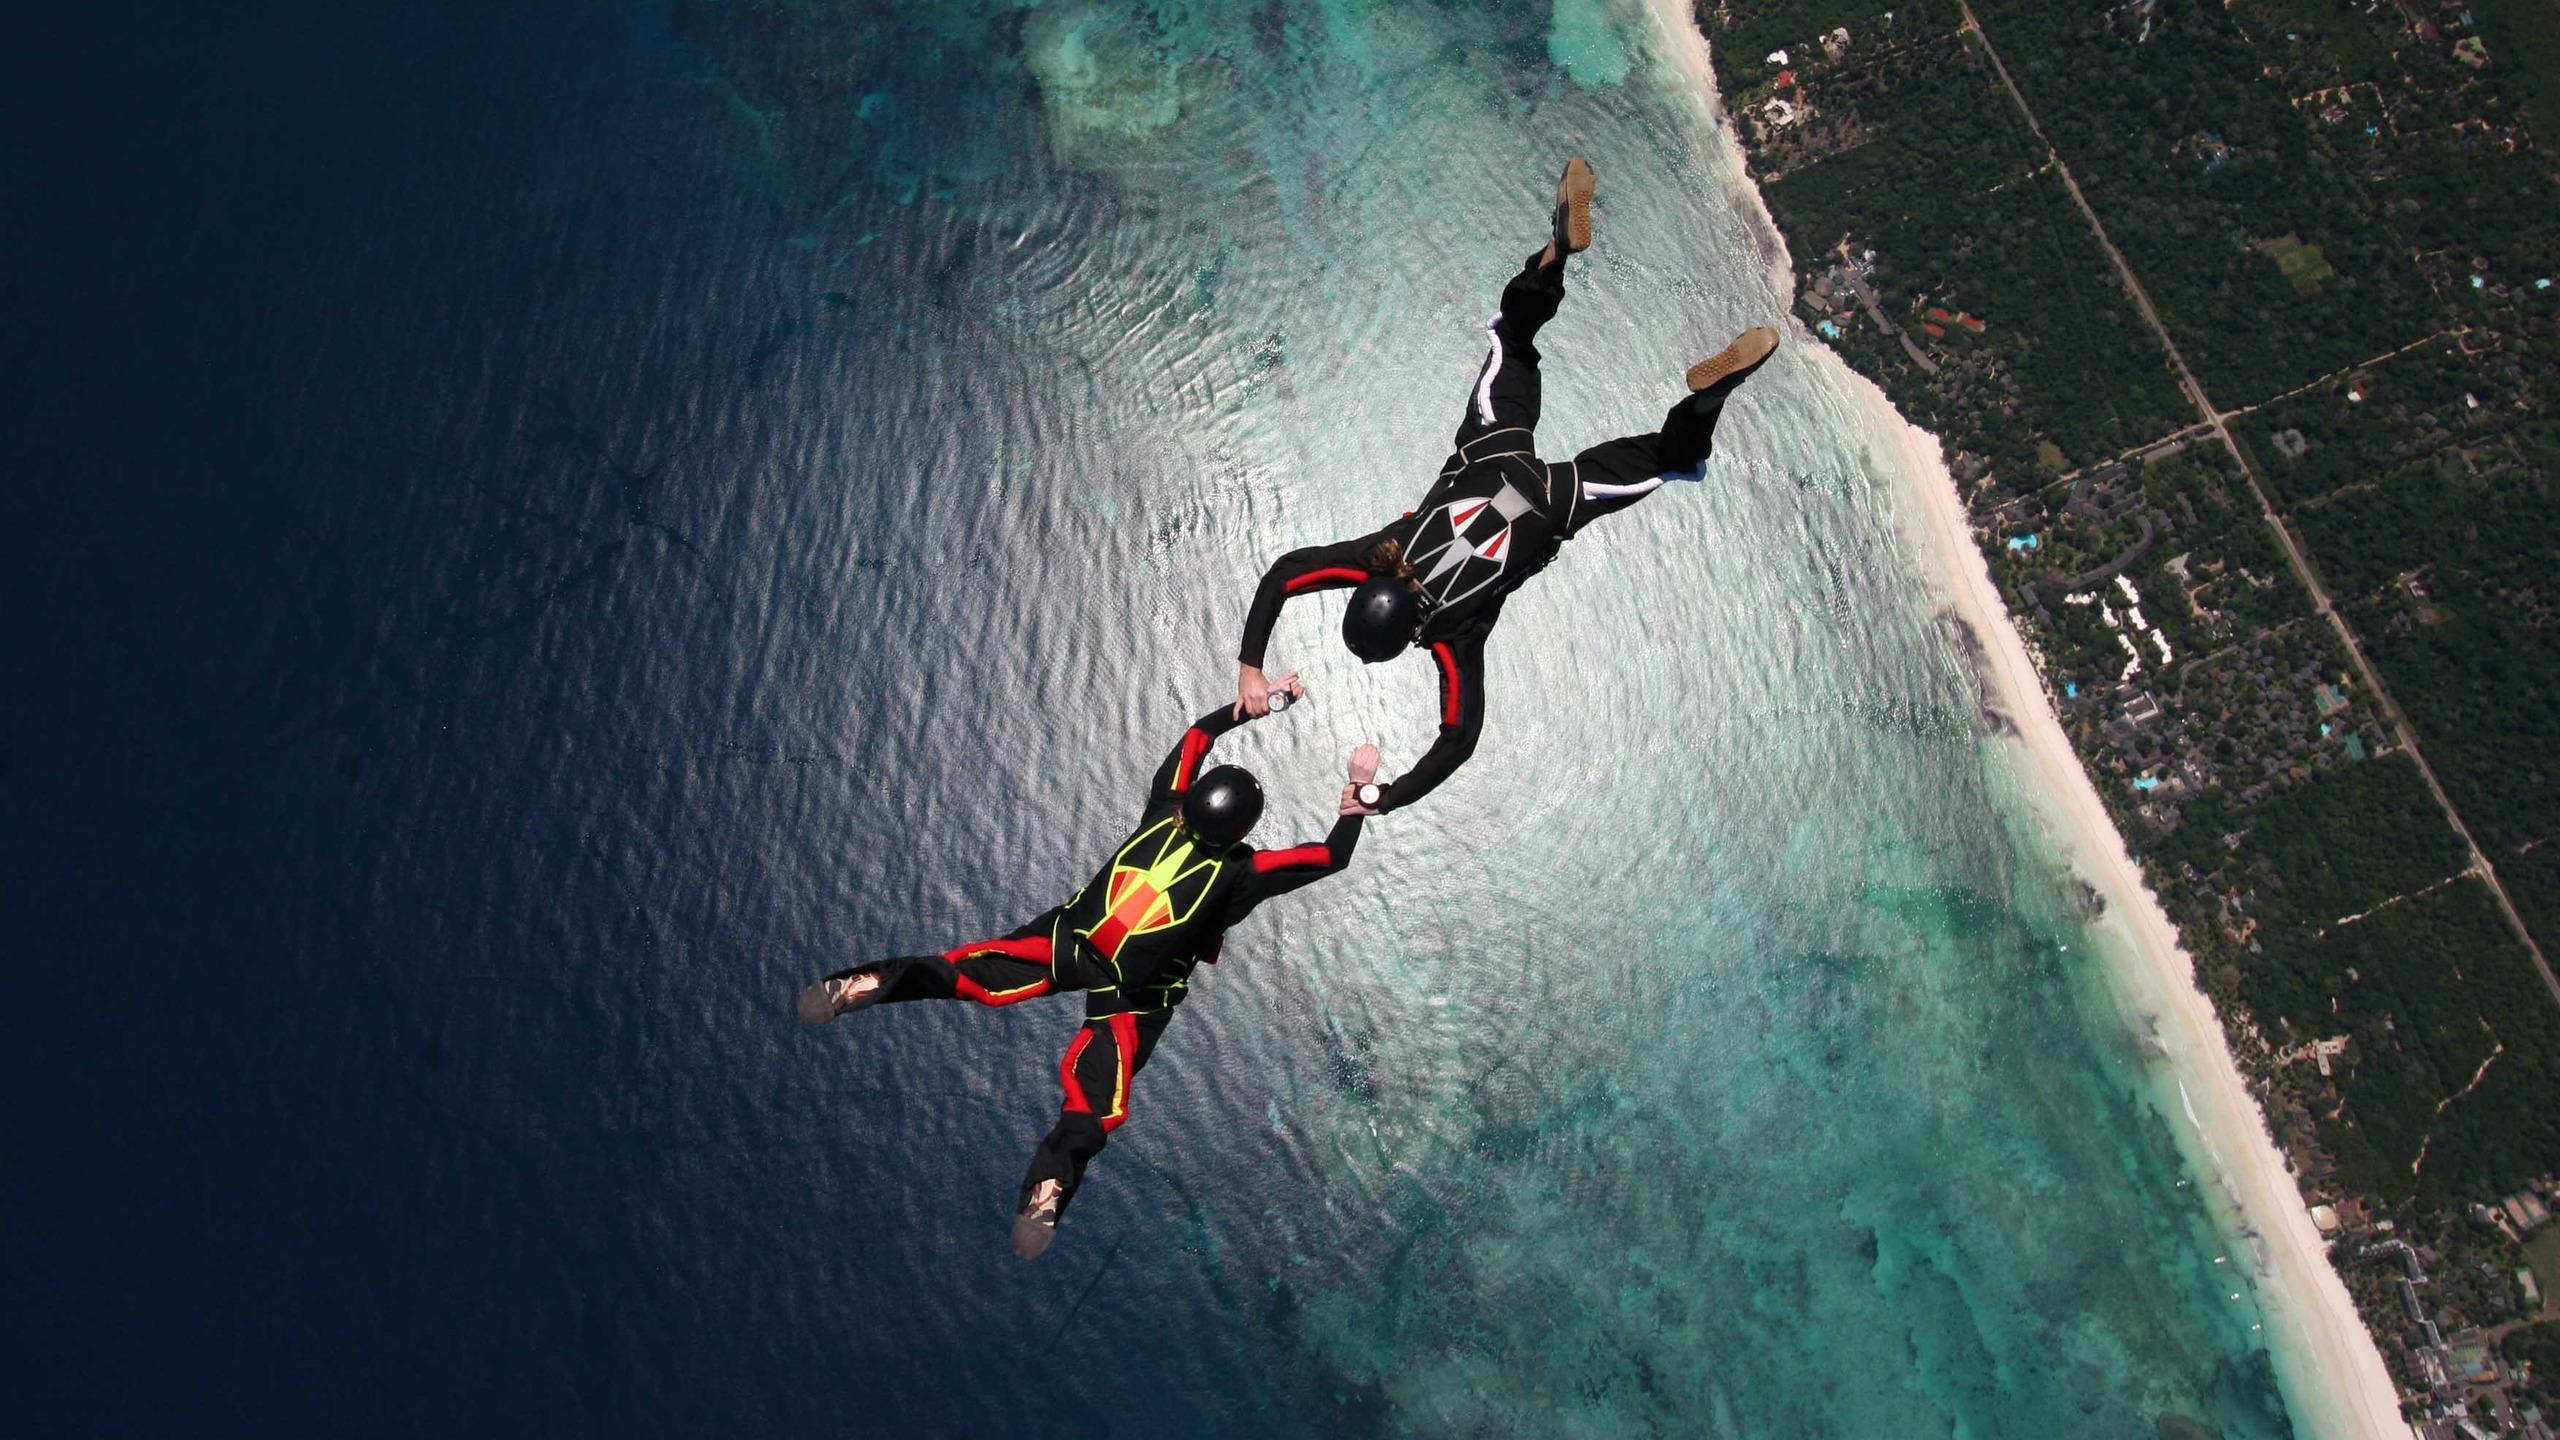 Download wallpaper 2560x1440 skydivers, parachuting, stunt